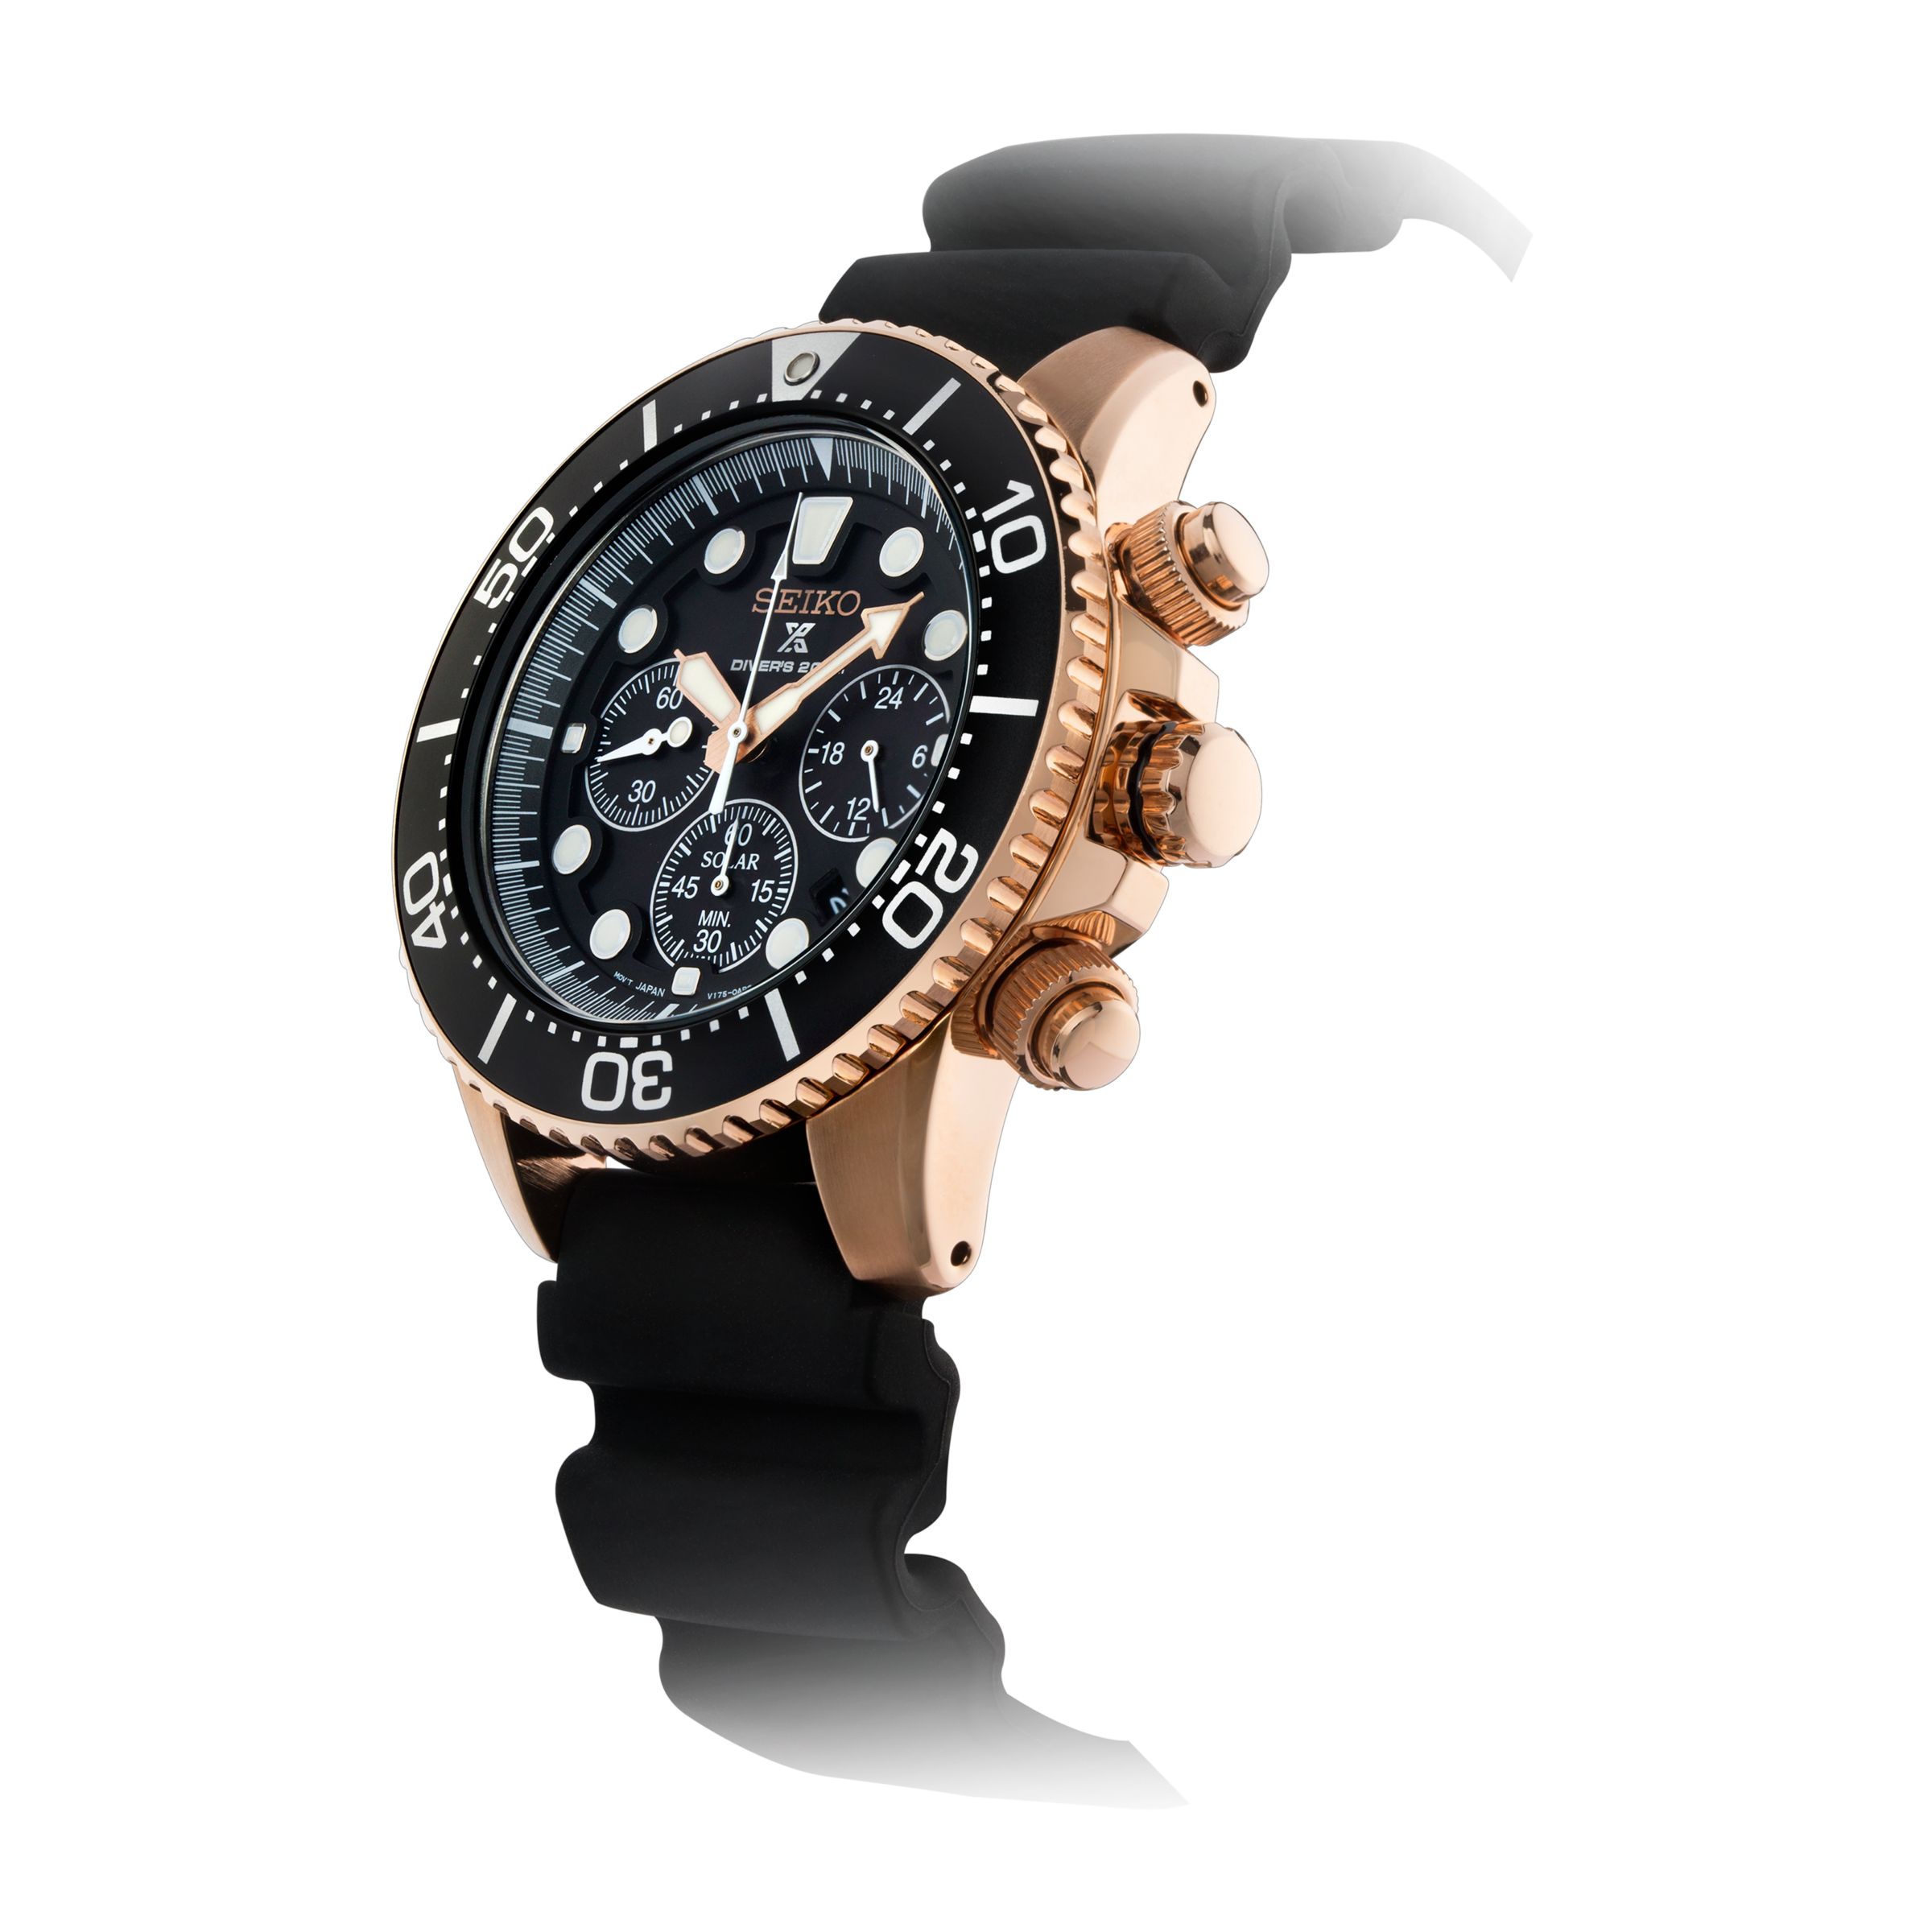 Seiko SSC618P1 Men's Prospex Silicone Strap Divers Watch, Black/Rose Gold